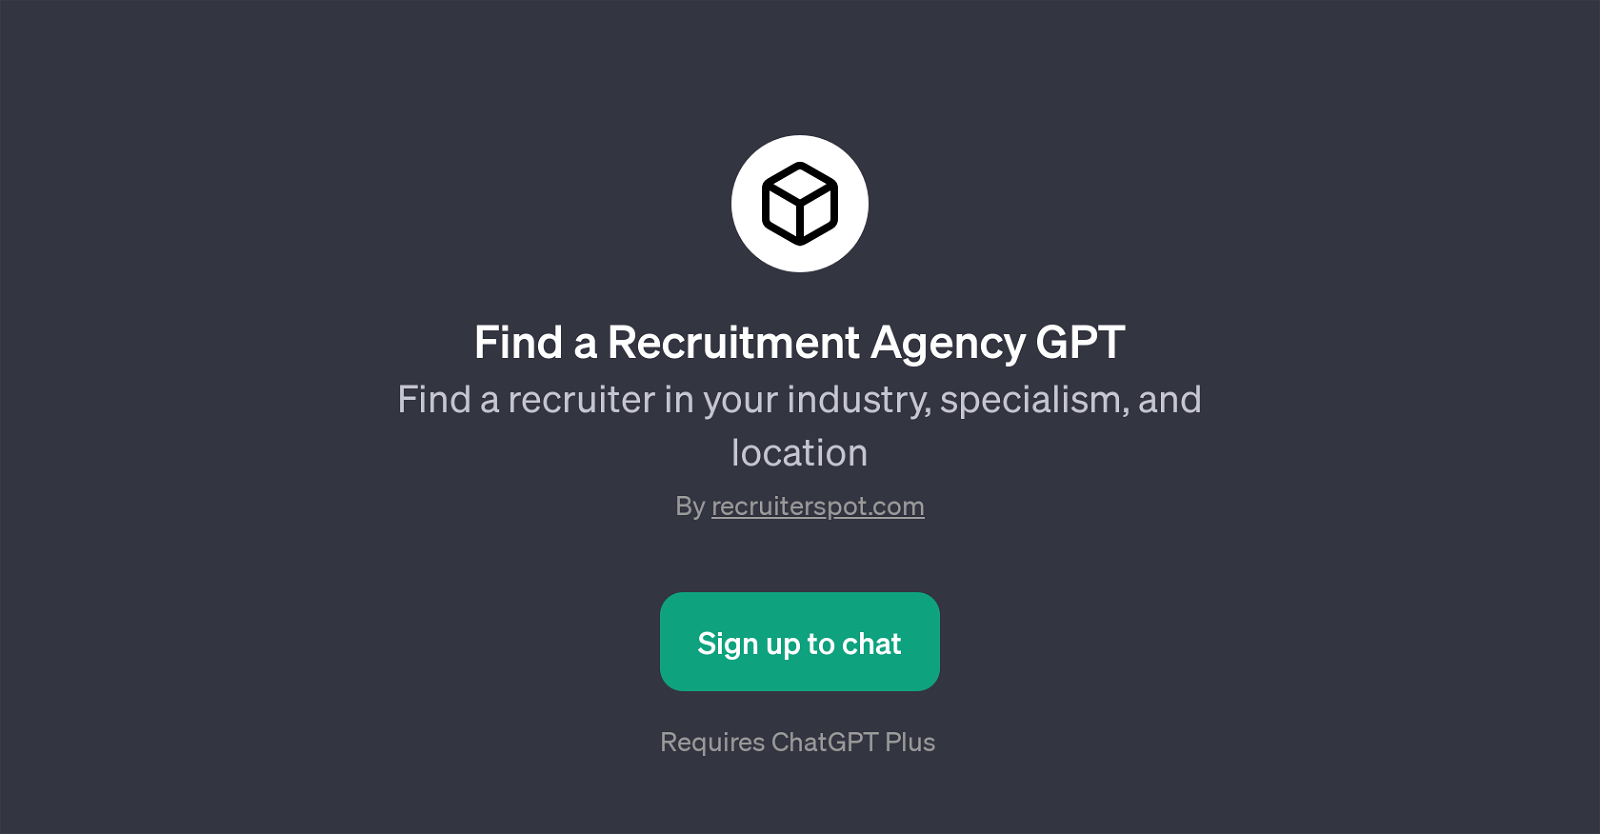 Find a Recruitment Agency GPT website